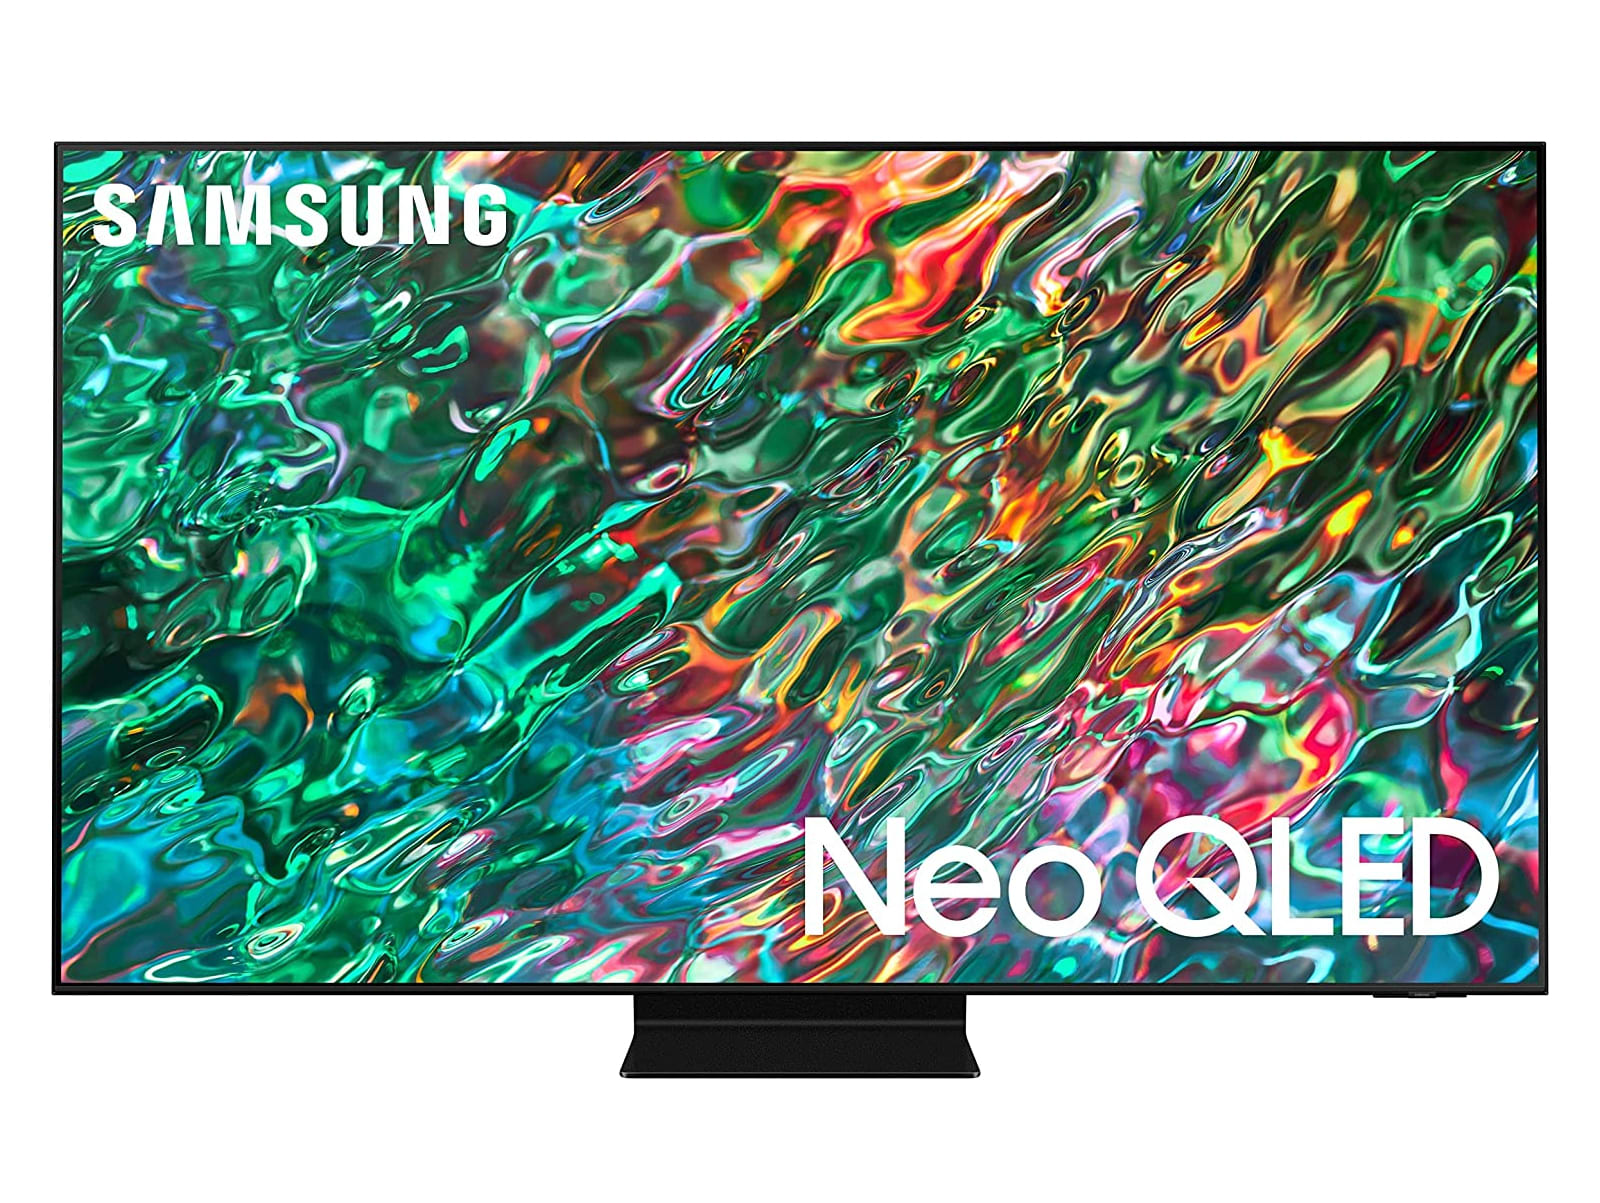 Samsung QN90B Mini LED TV (55-inch)